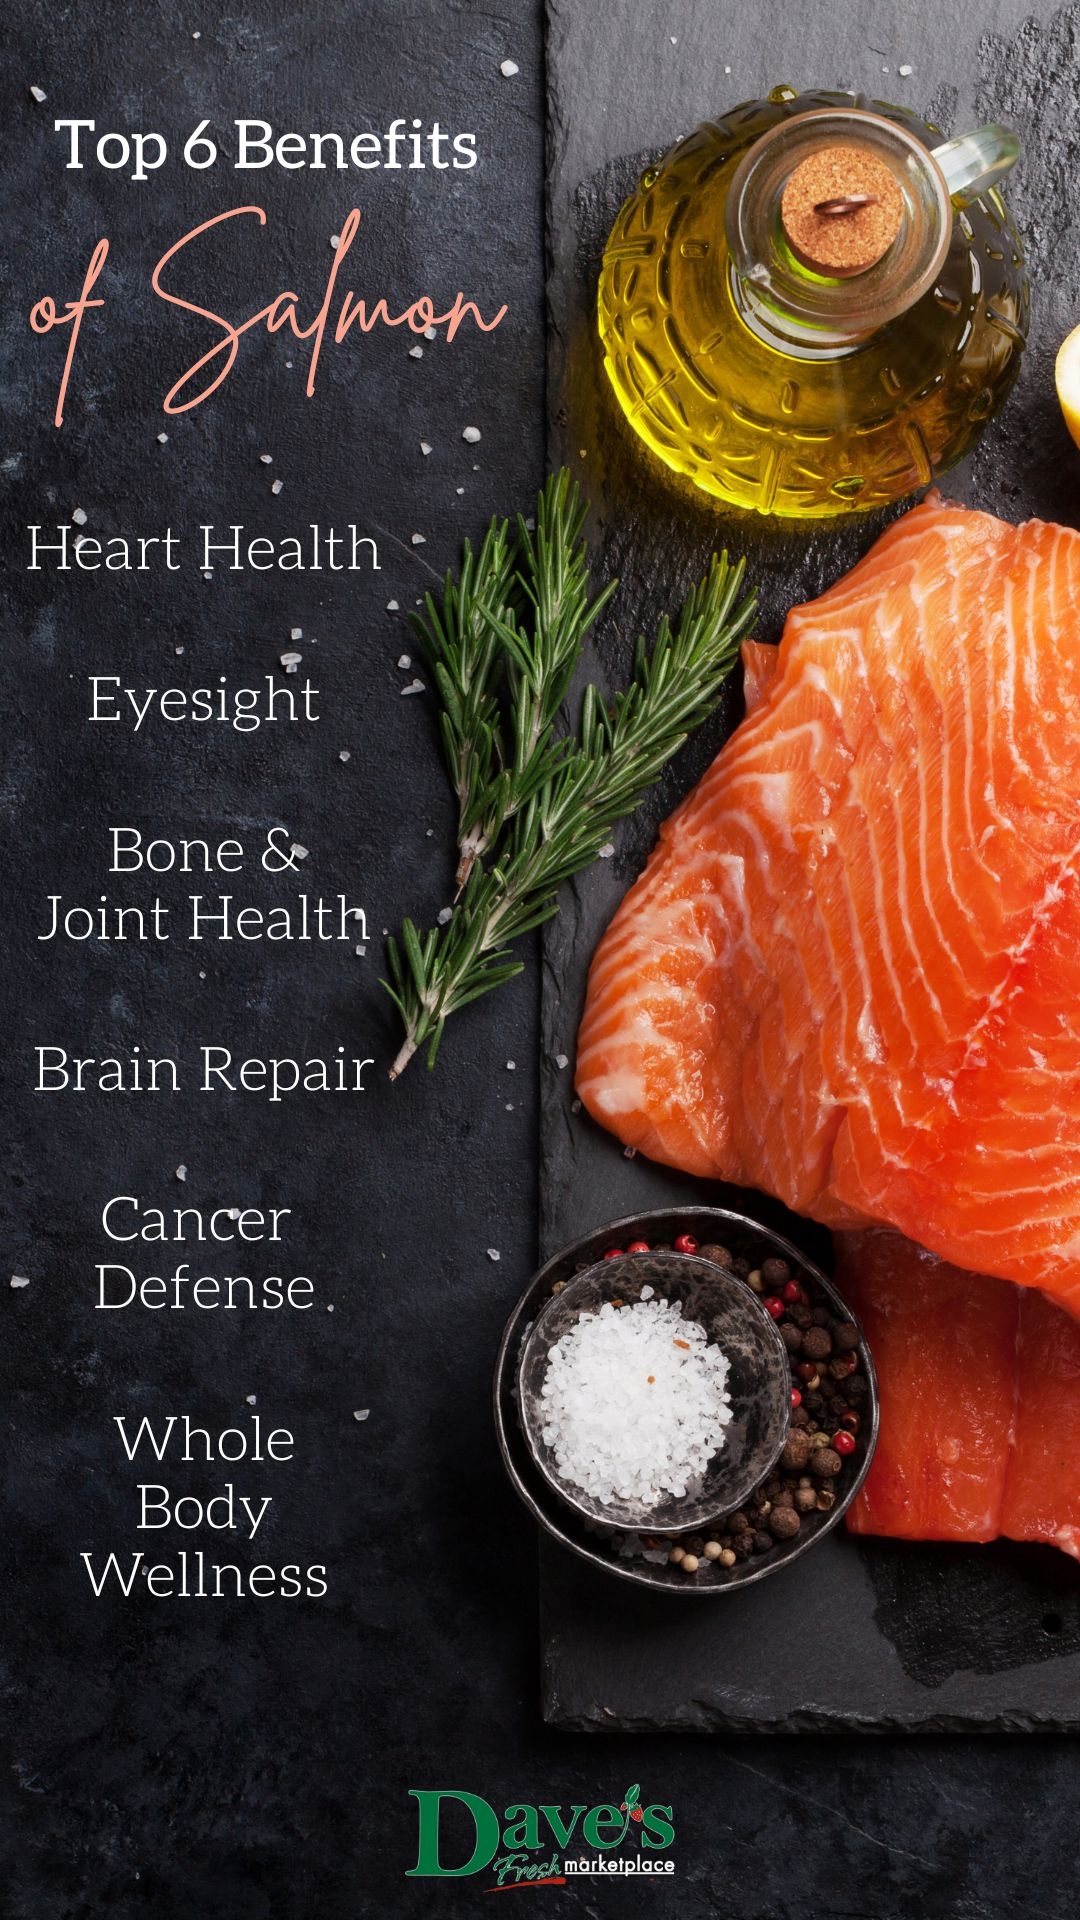 Salmon Benefits